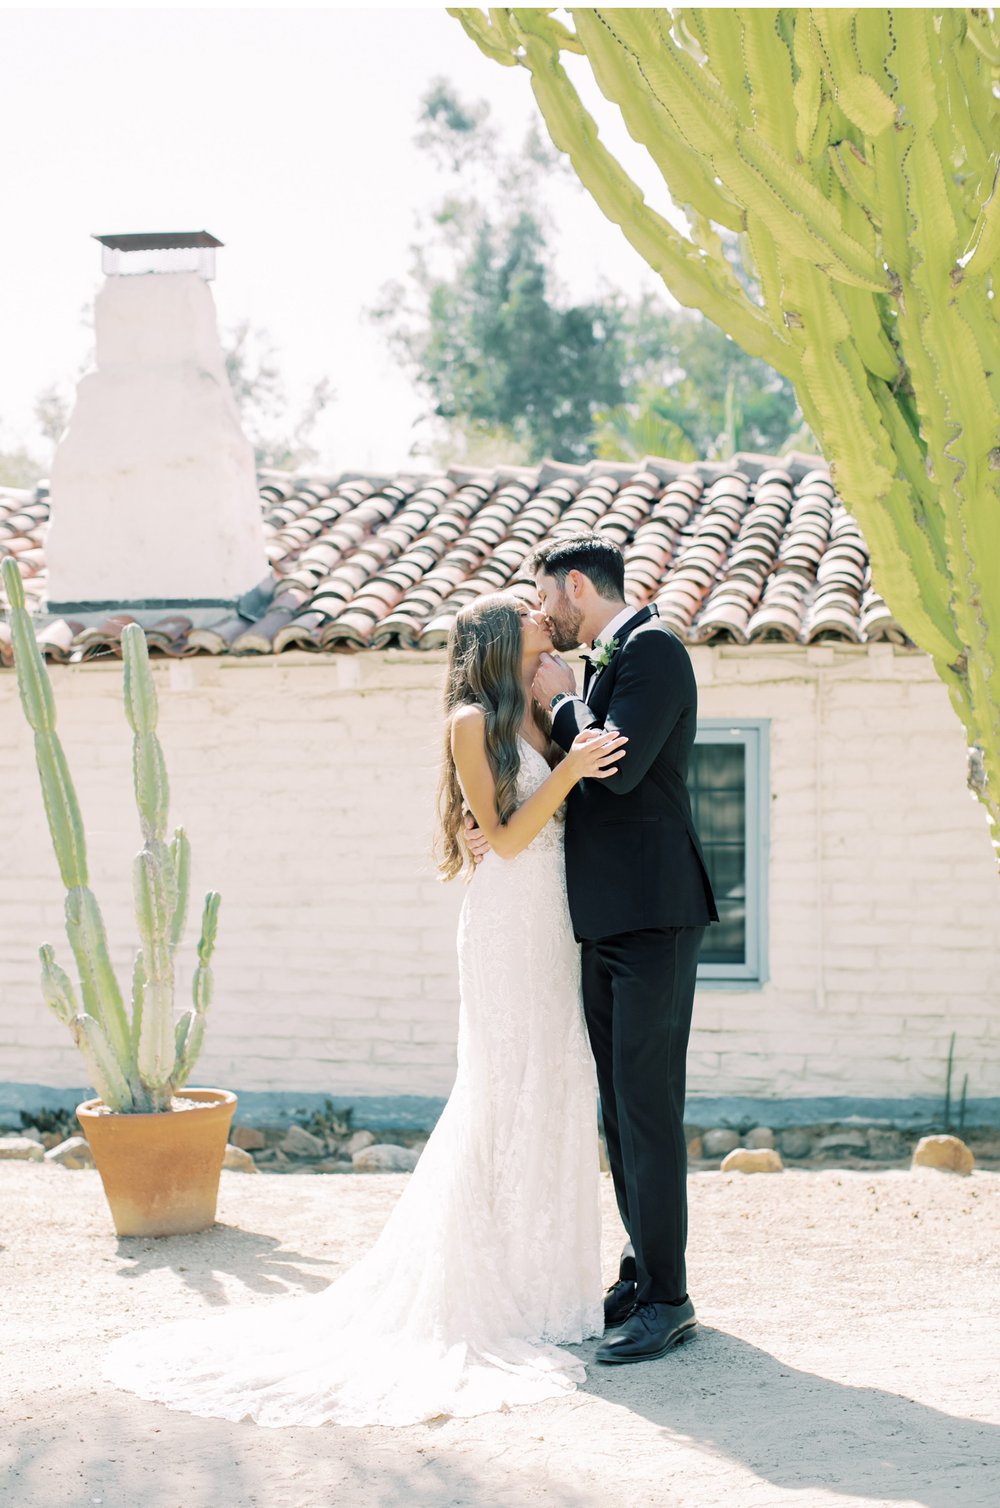 Top-Wedding-Photographers-Southern-California-Weddings-Al-Fresco-Event-Photography-High-End-Weddings-Bright-and-Clean-Photography-Film-Photography_03.jpg